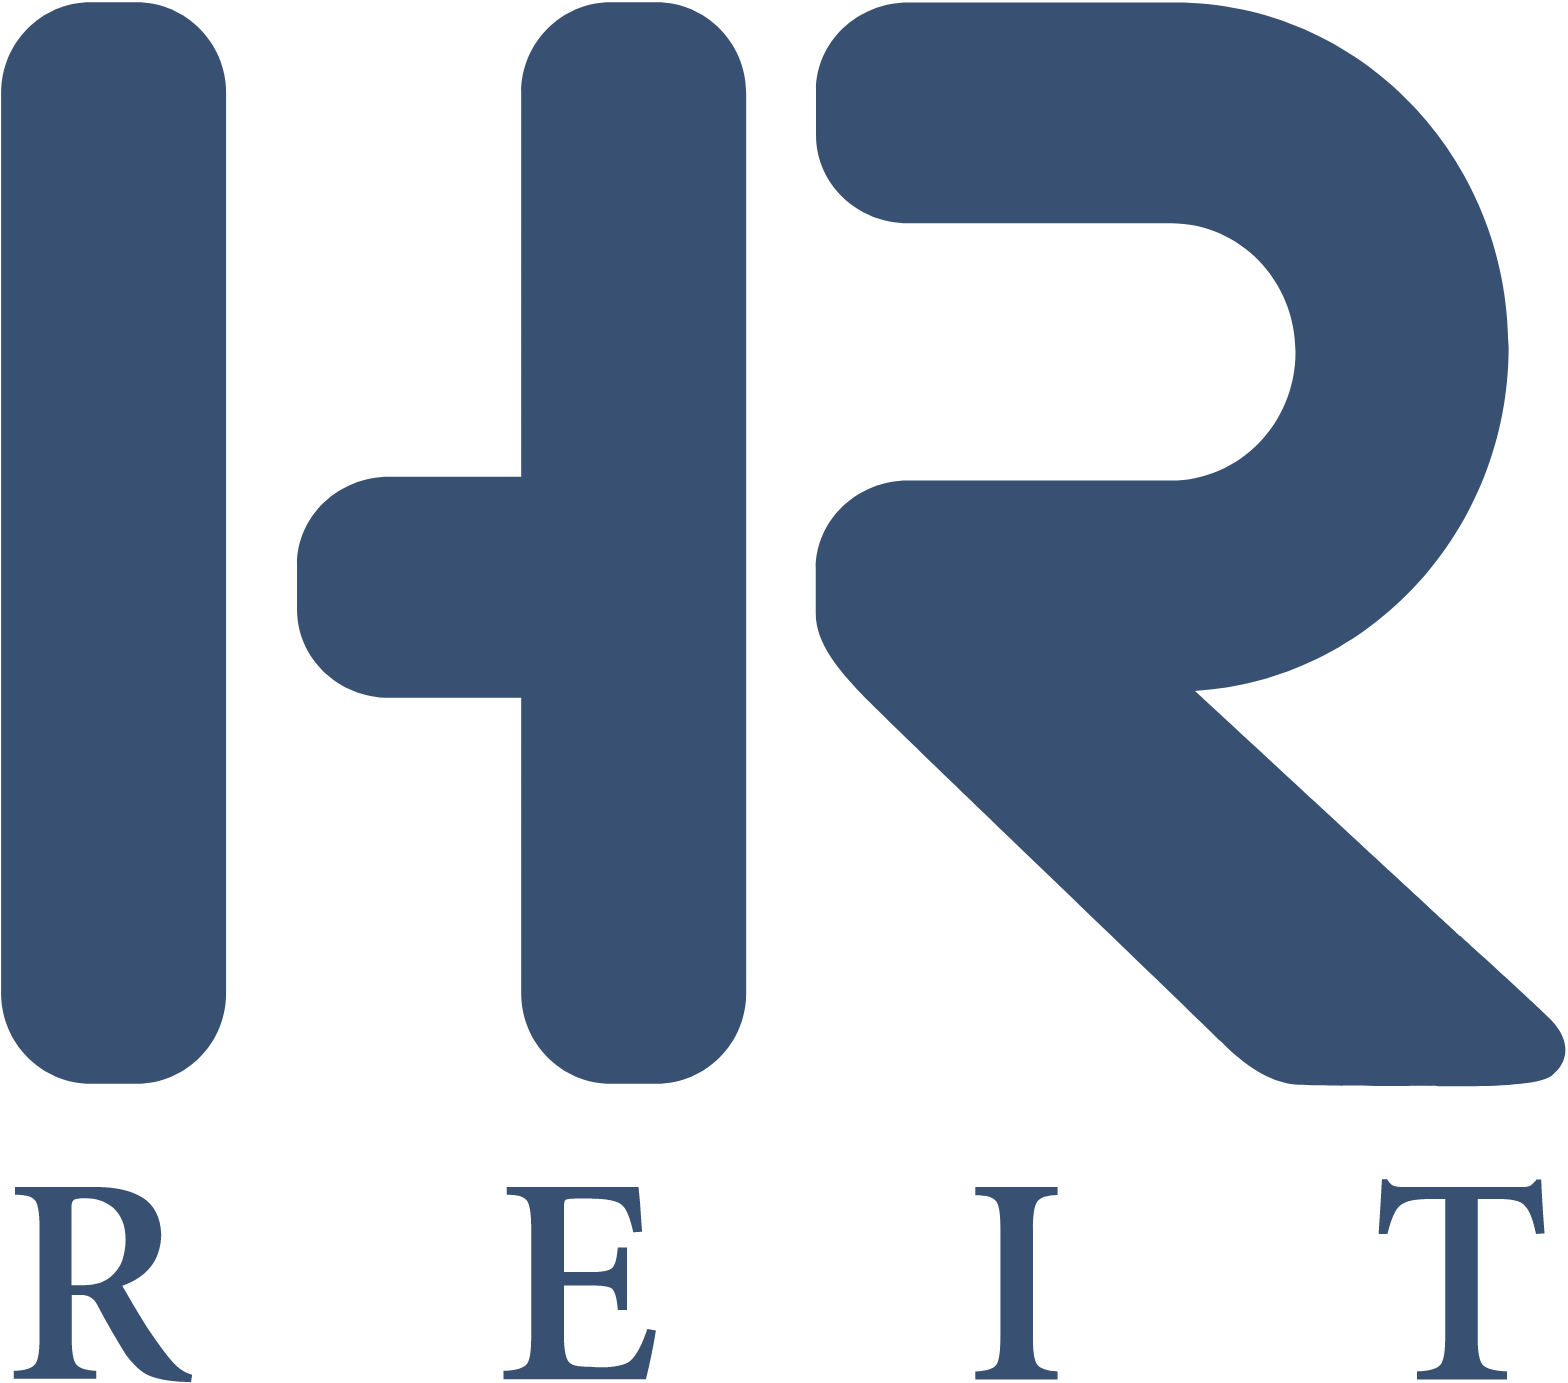 Reit логотип. Картинка r+h. H,R логотип. Top reiting лого.